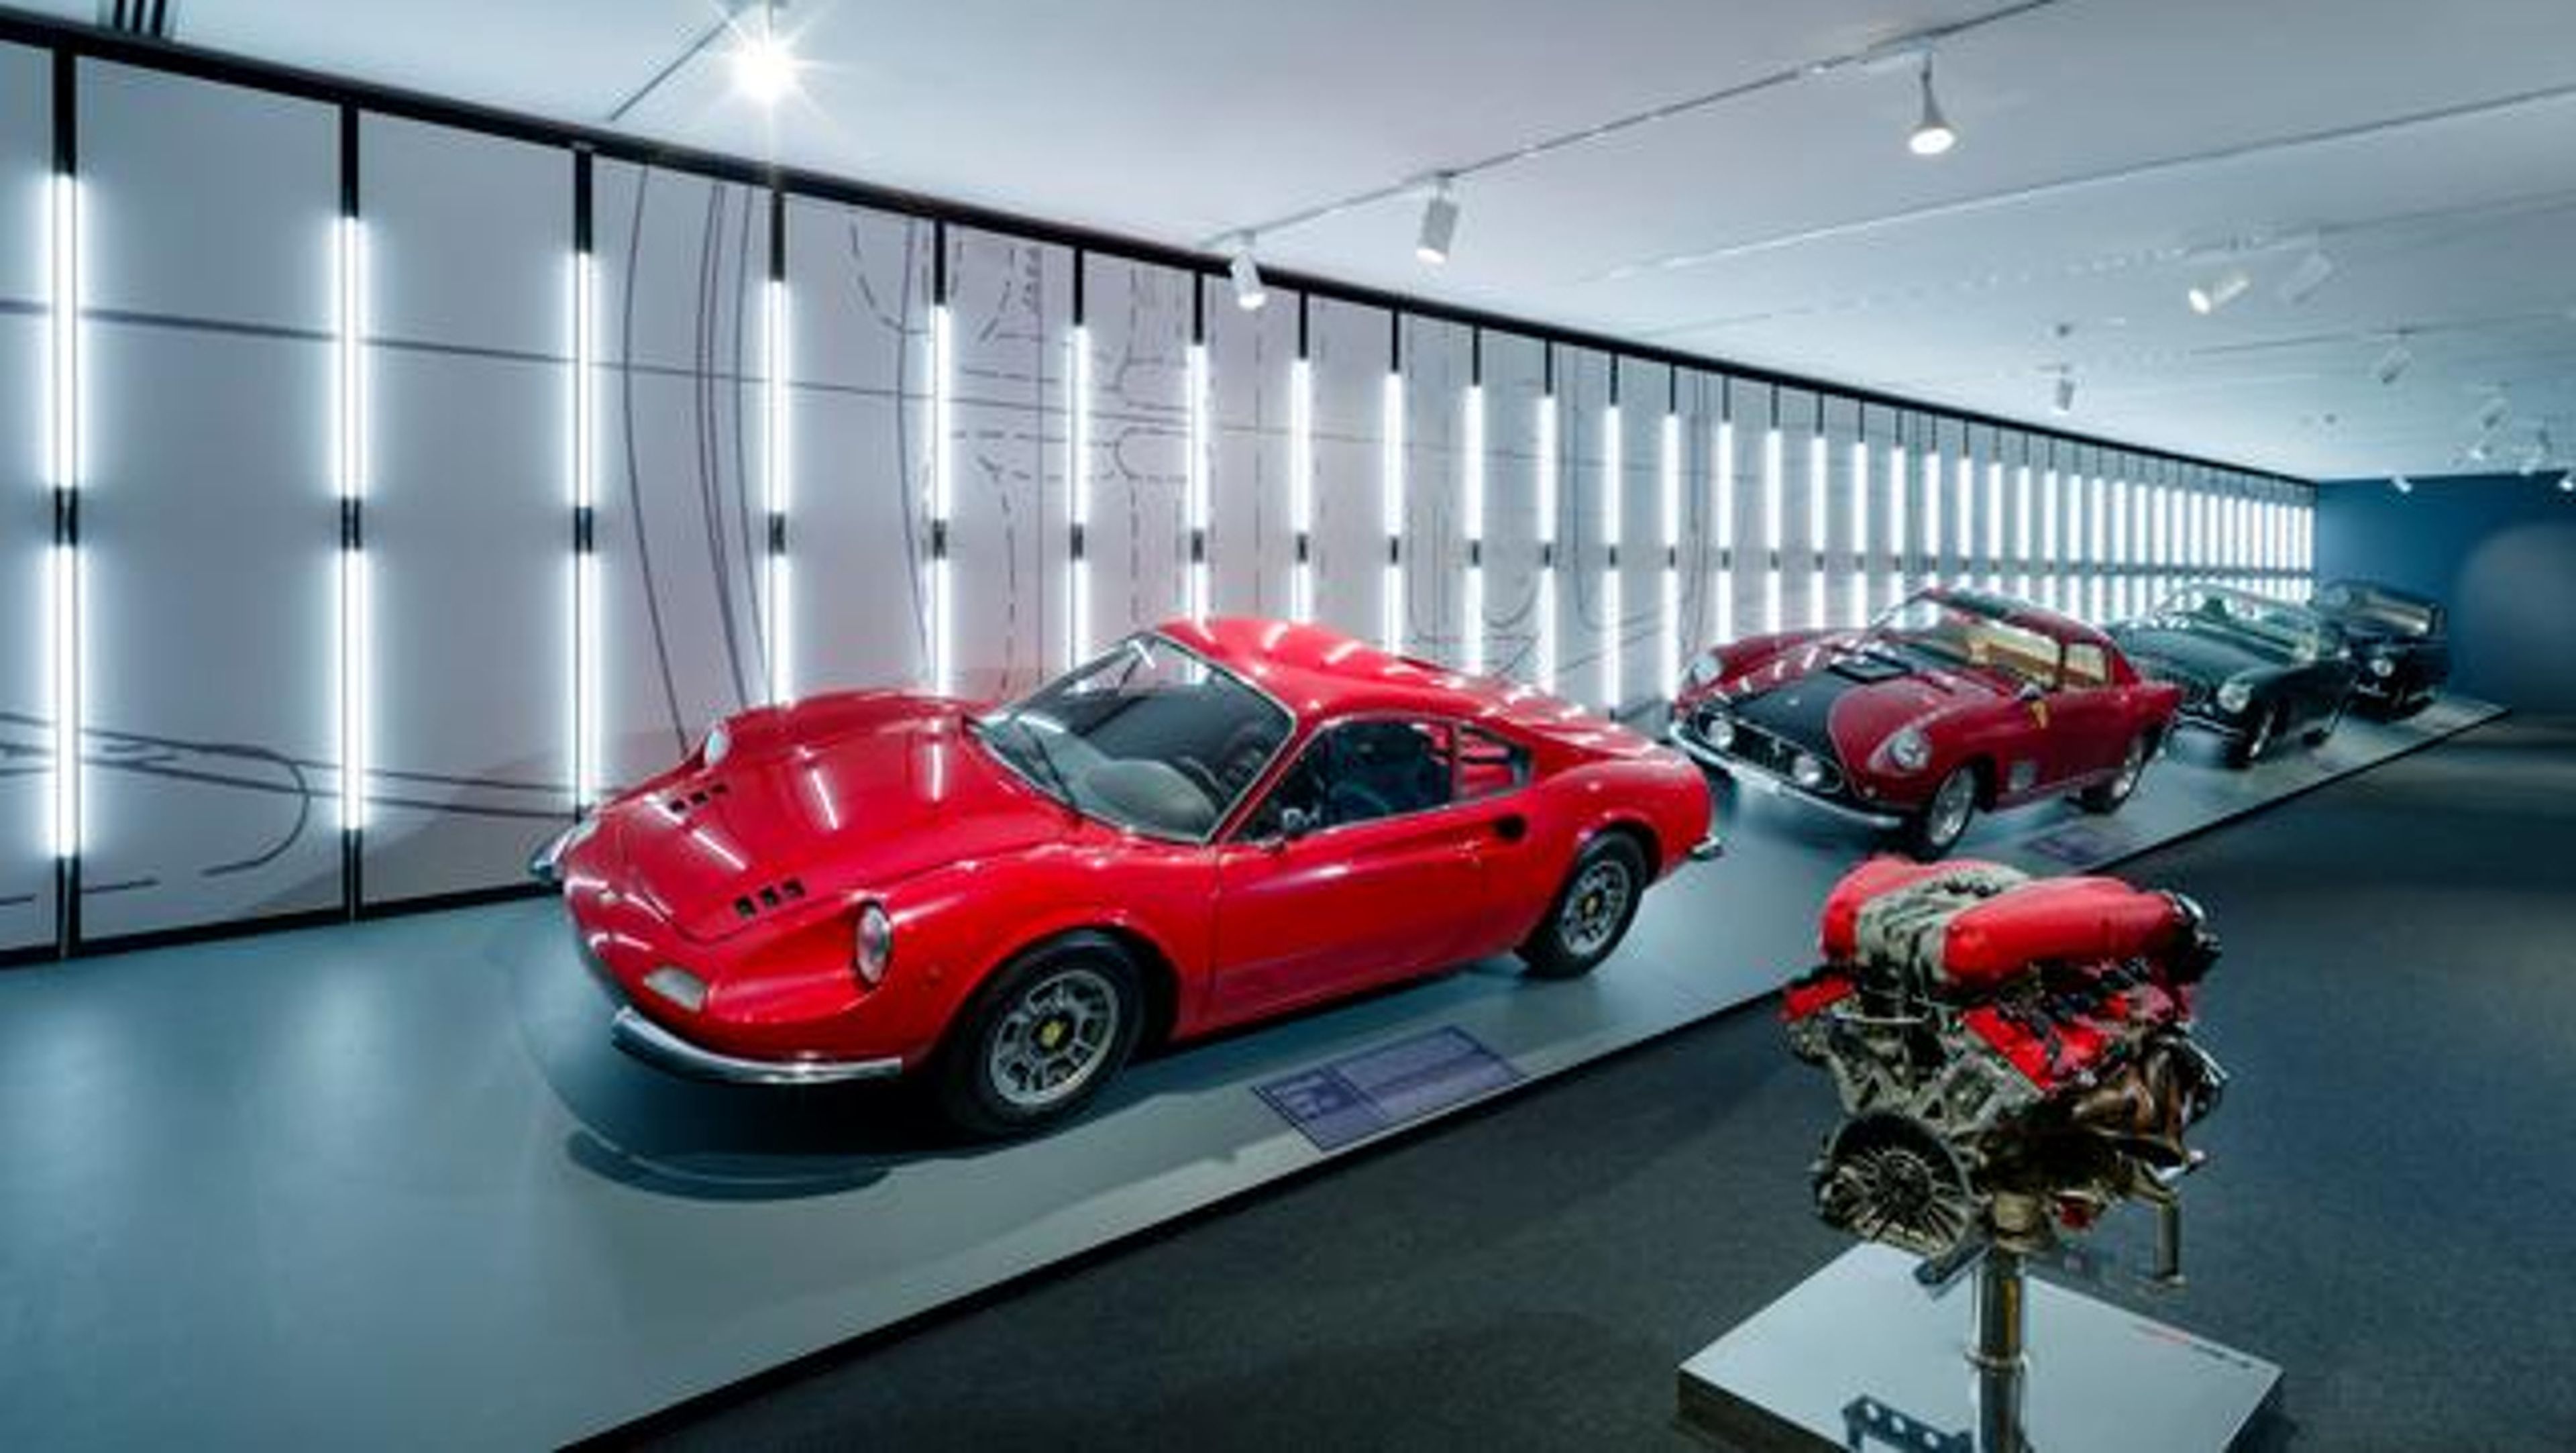 Driven by Enzo y Passion and Legend, exposiciones de Ferrari